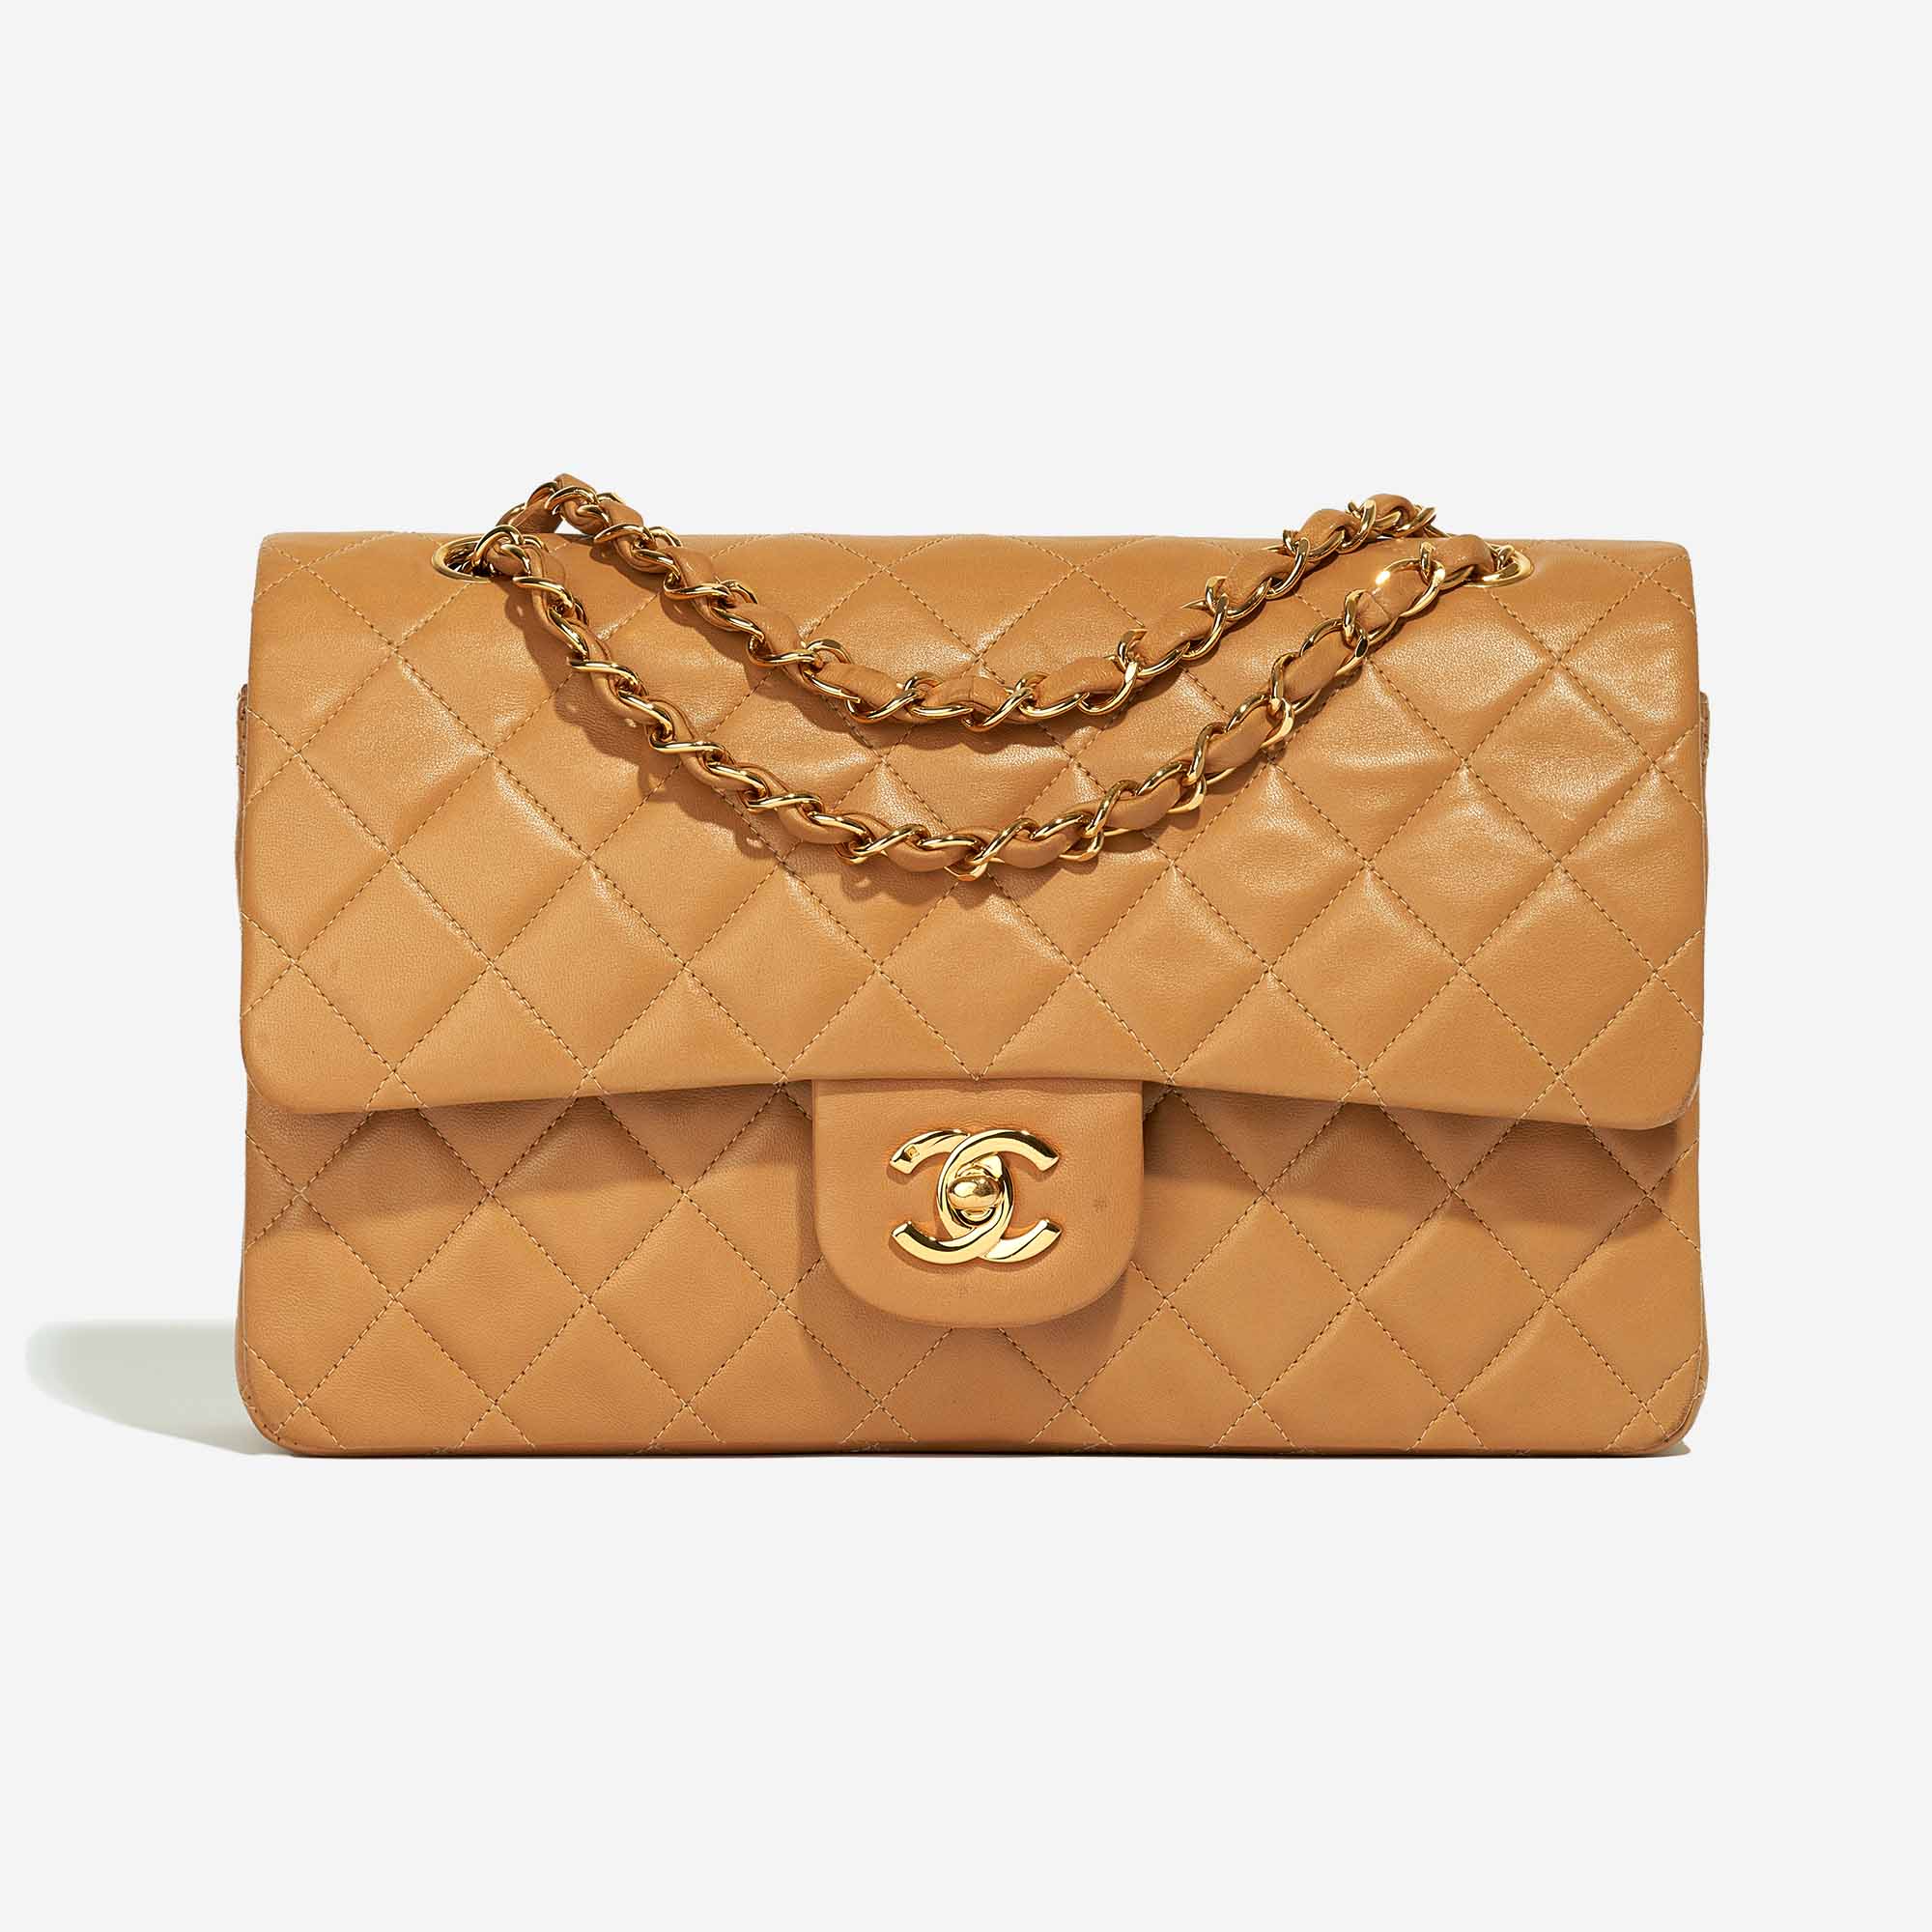 Chanel Speedy Bag - 2 For Sale on 1stDibs